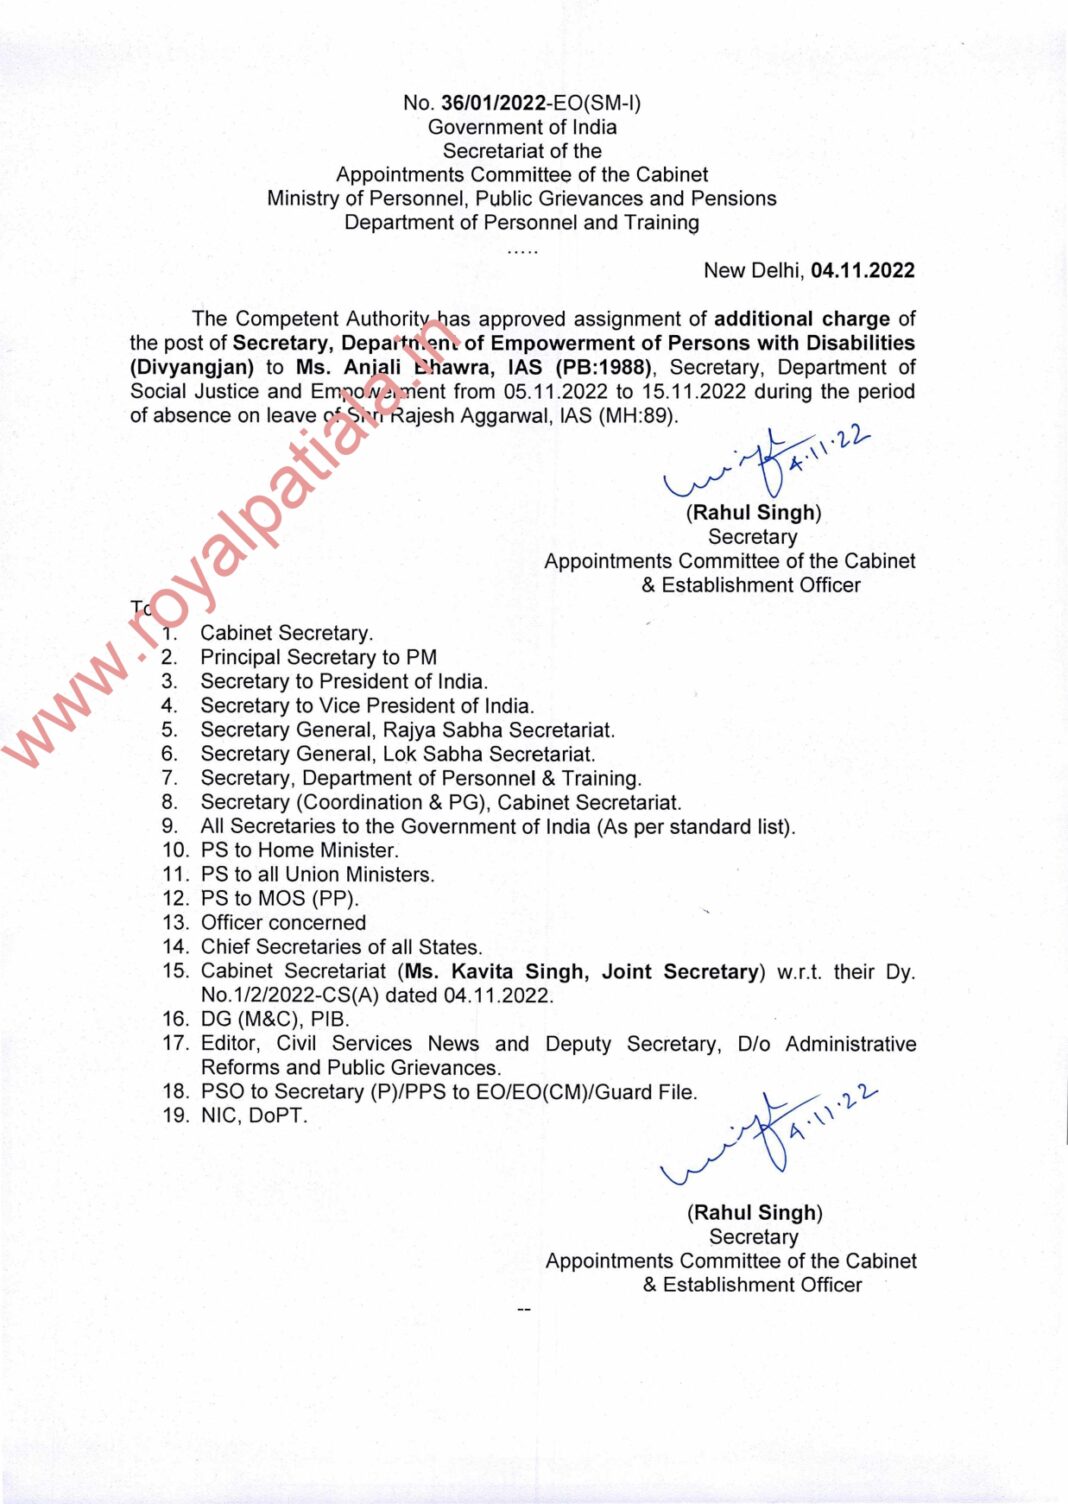 Punjab IAS on central deputation gets additional charge.